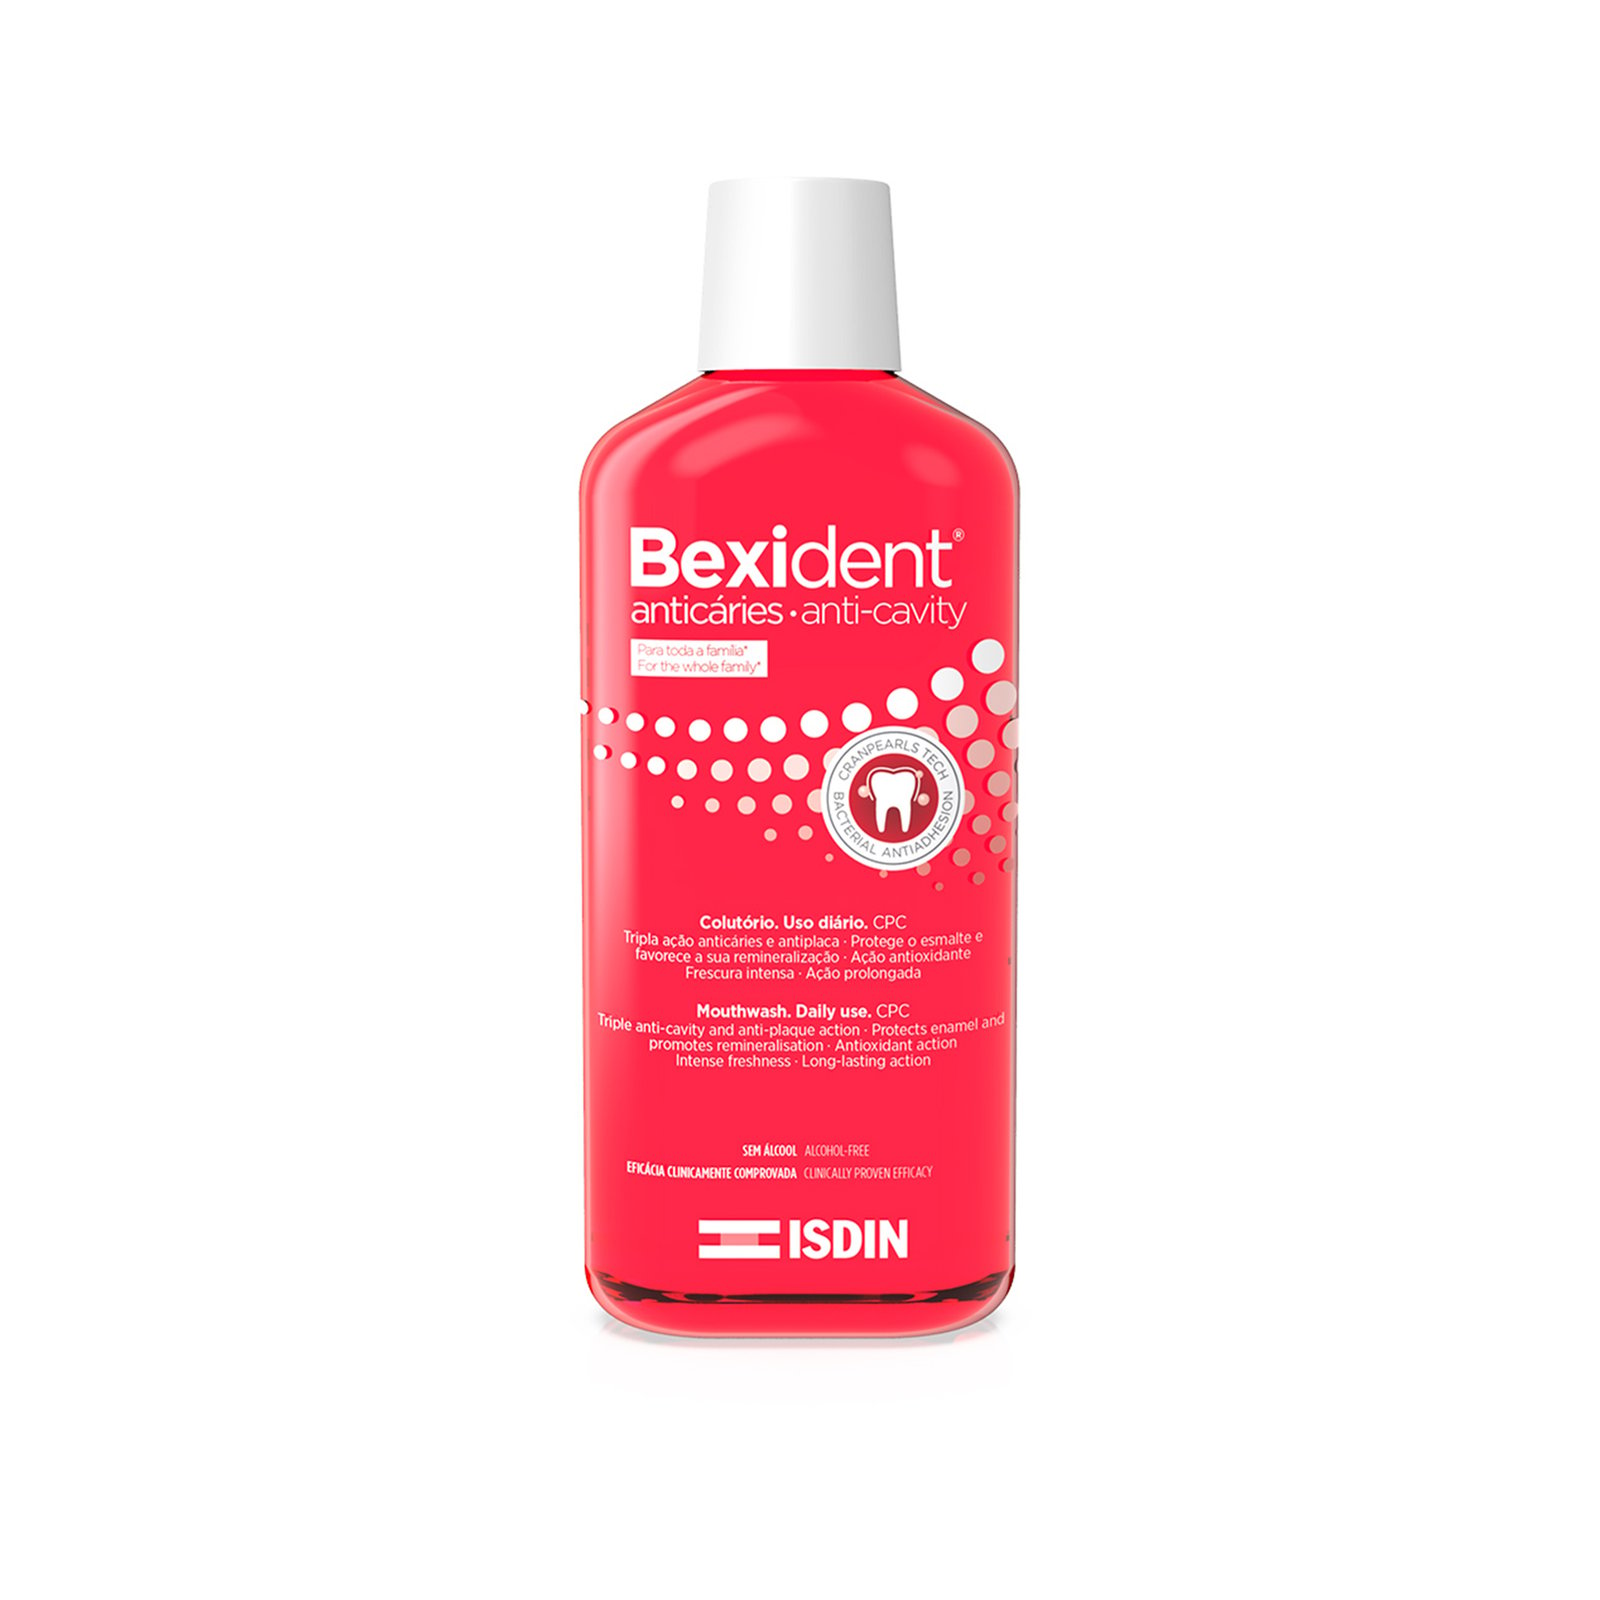 ISDIN Bexident Anticavity Mouthwash 500ml (16.91fl oz)